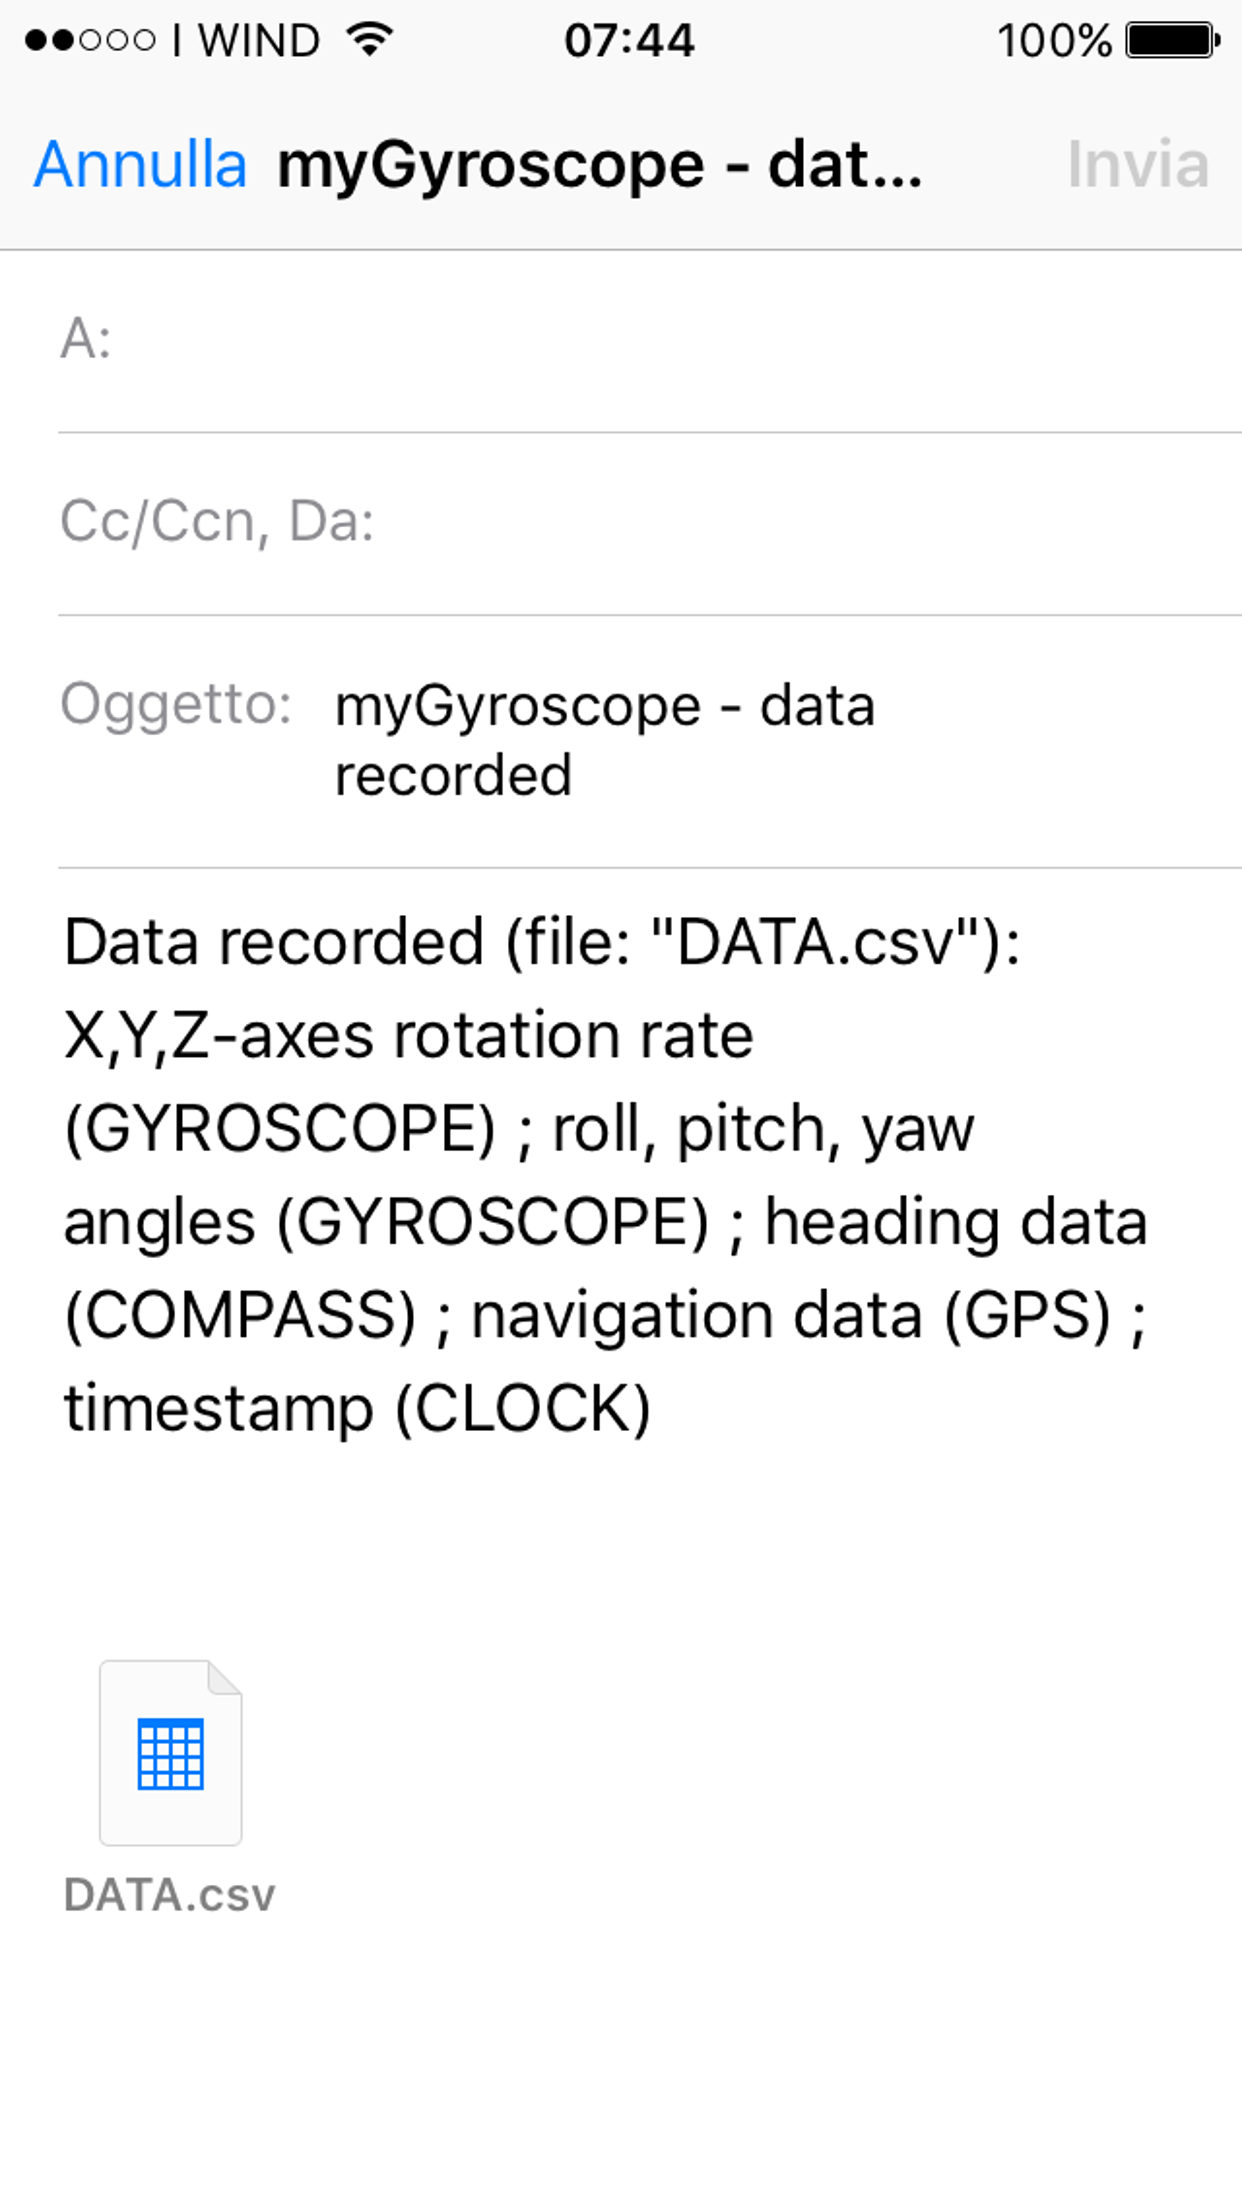 myGyroscope